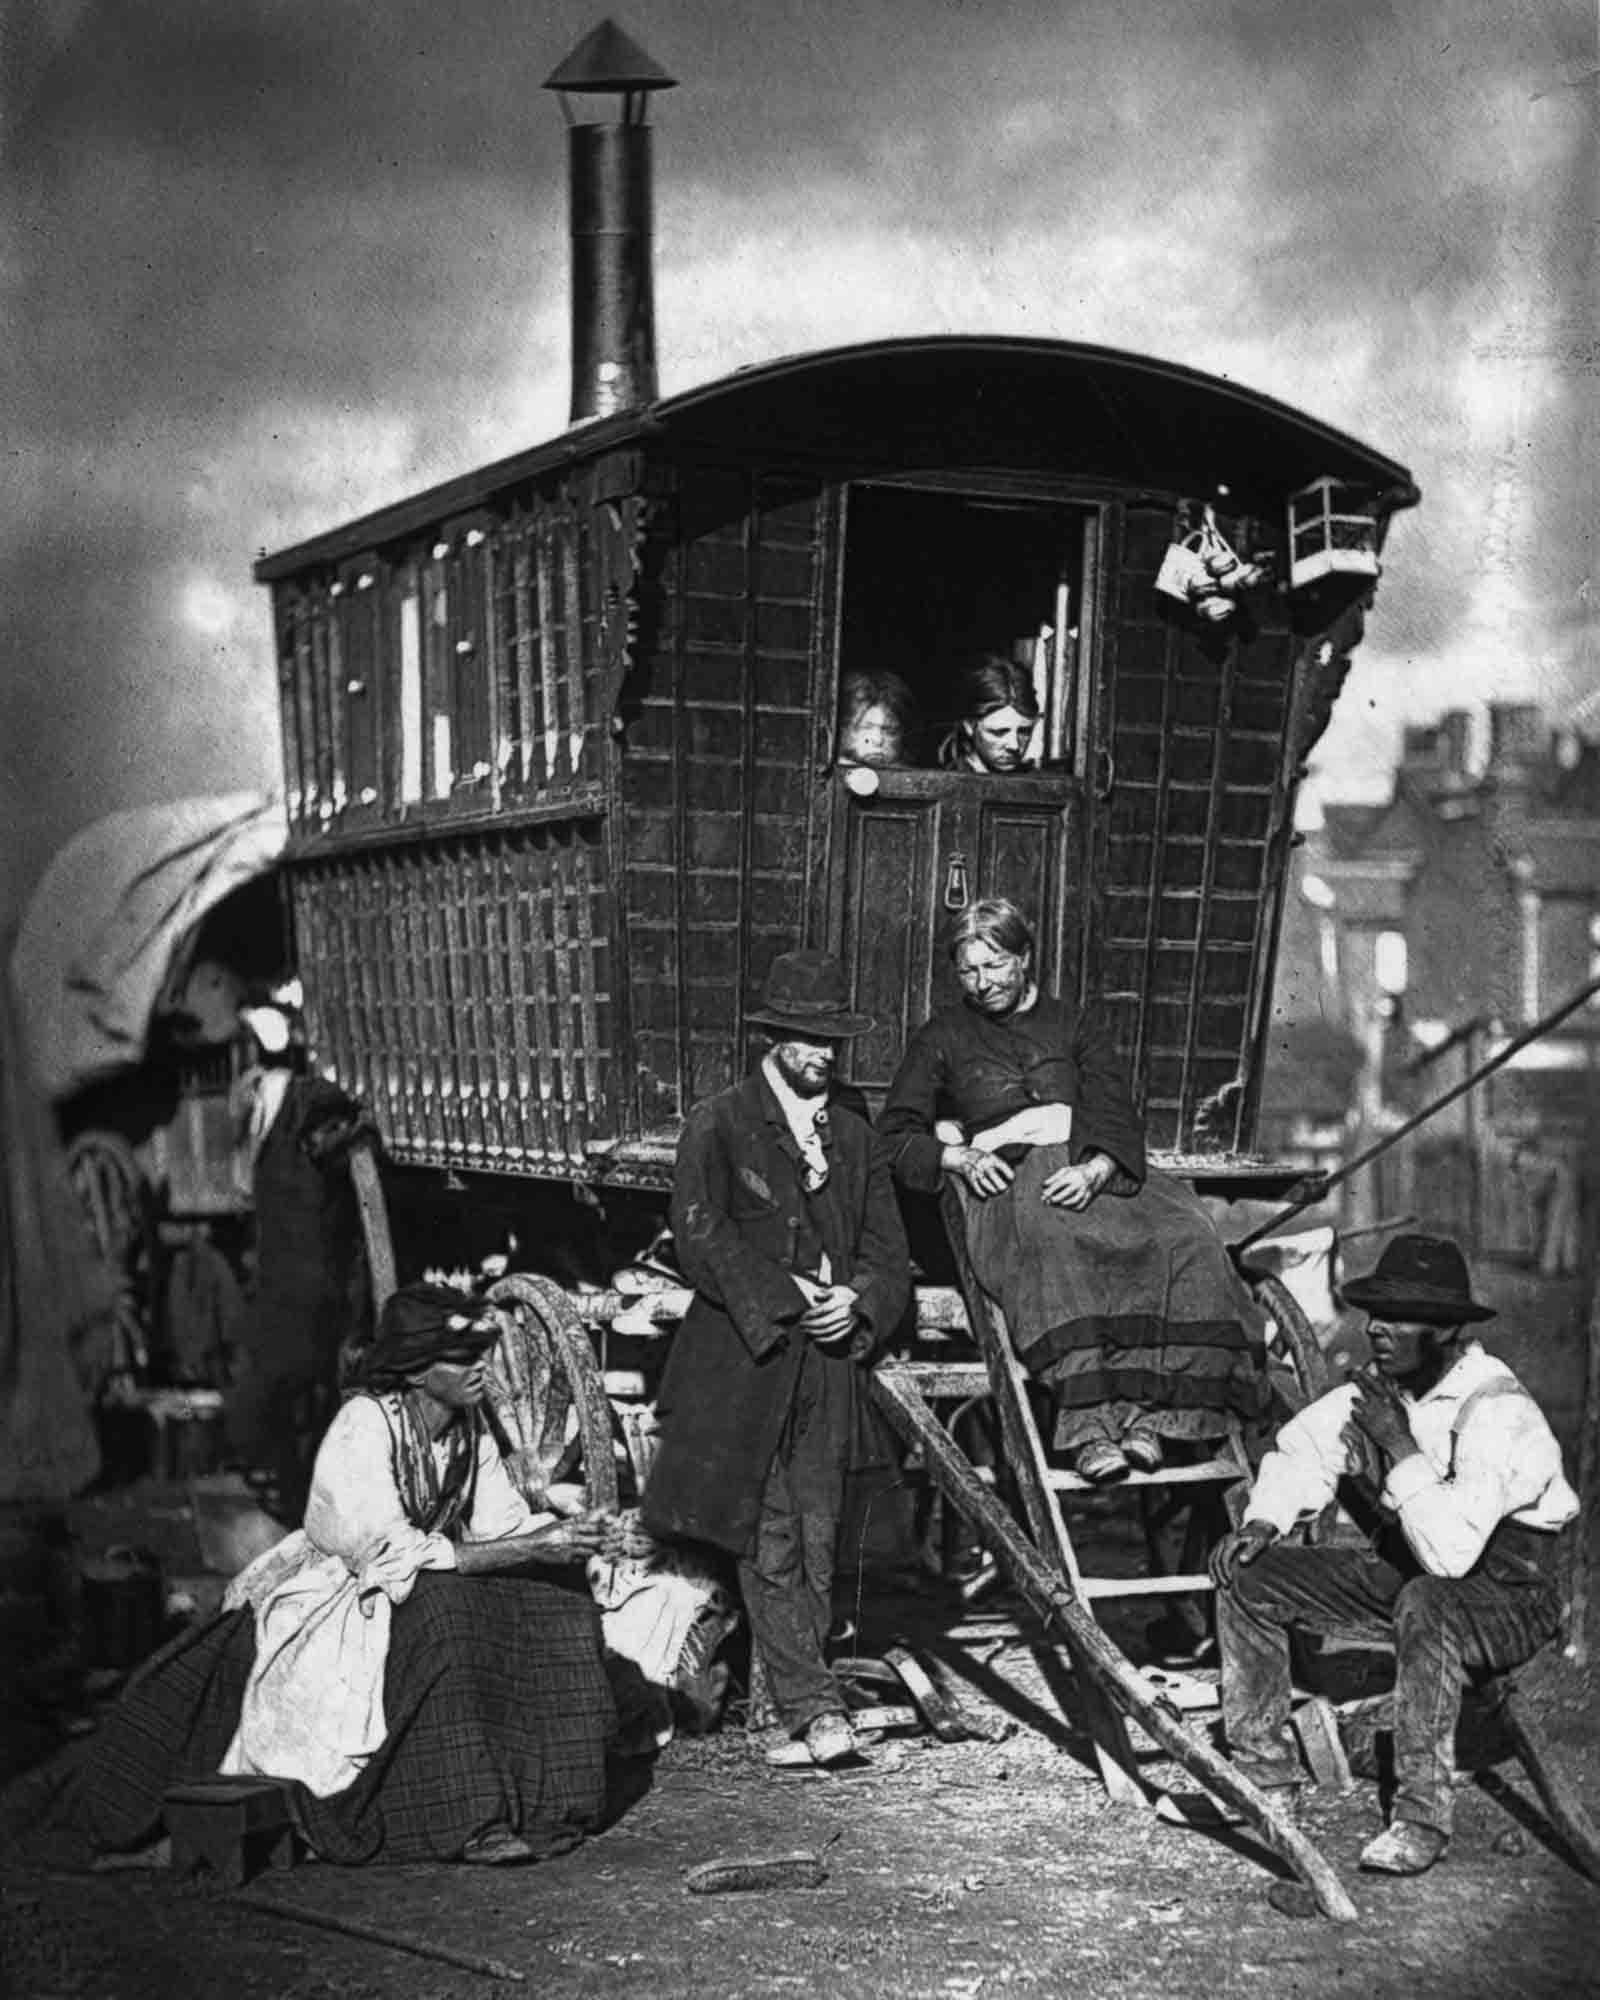 A “Gypsy” caravan at an encampment near Latimer Road in Notting Hill, 1877.